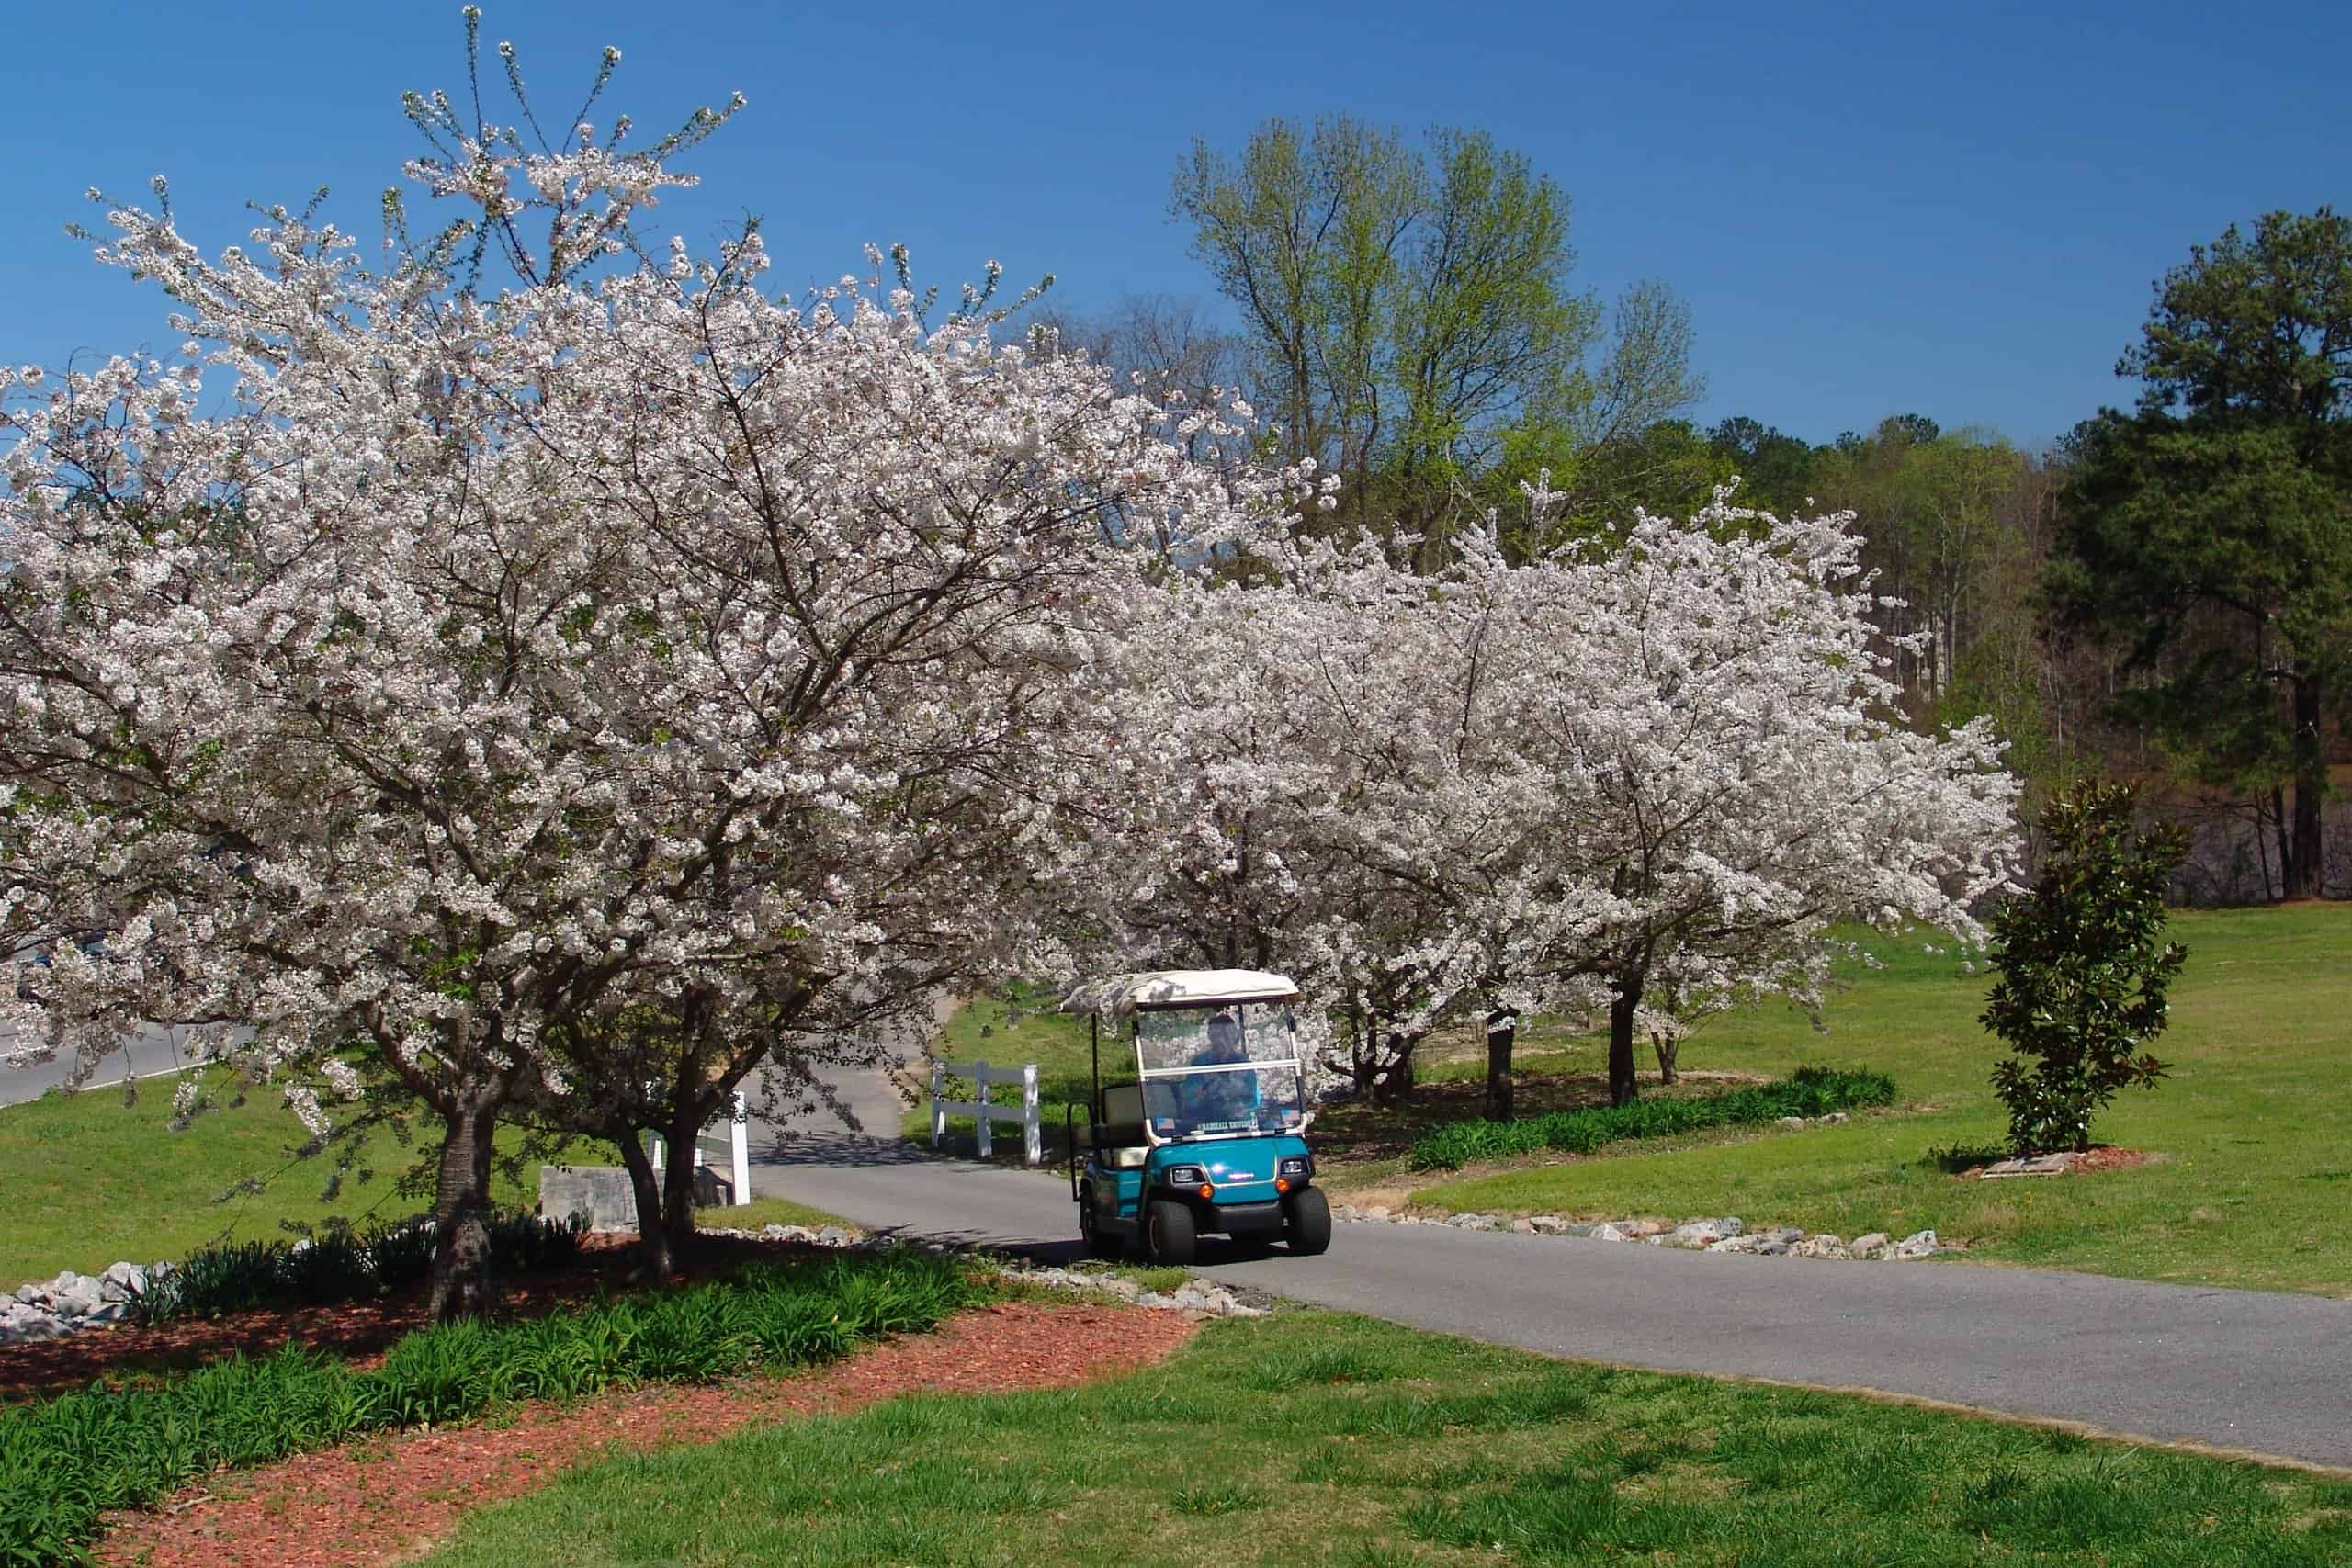 peach tree city with golf cart shown on a golf cart path